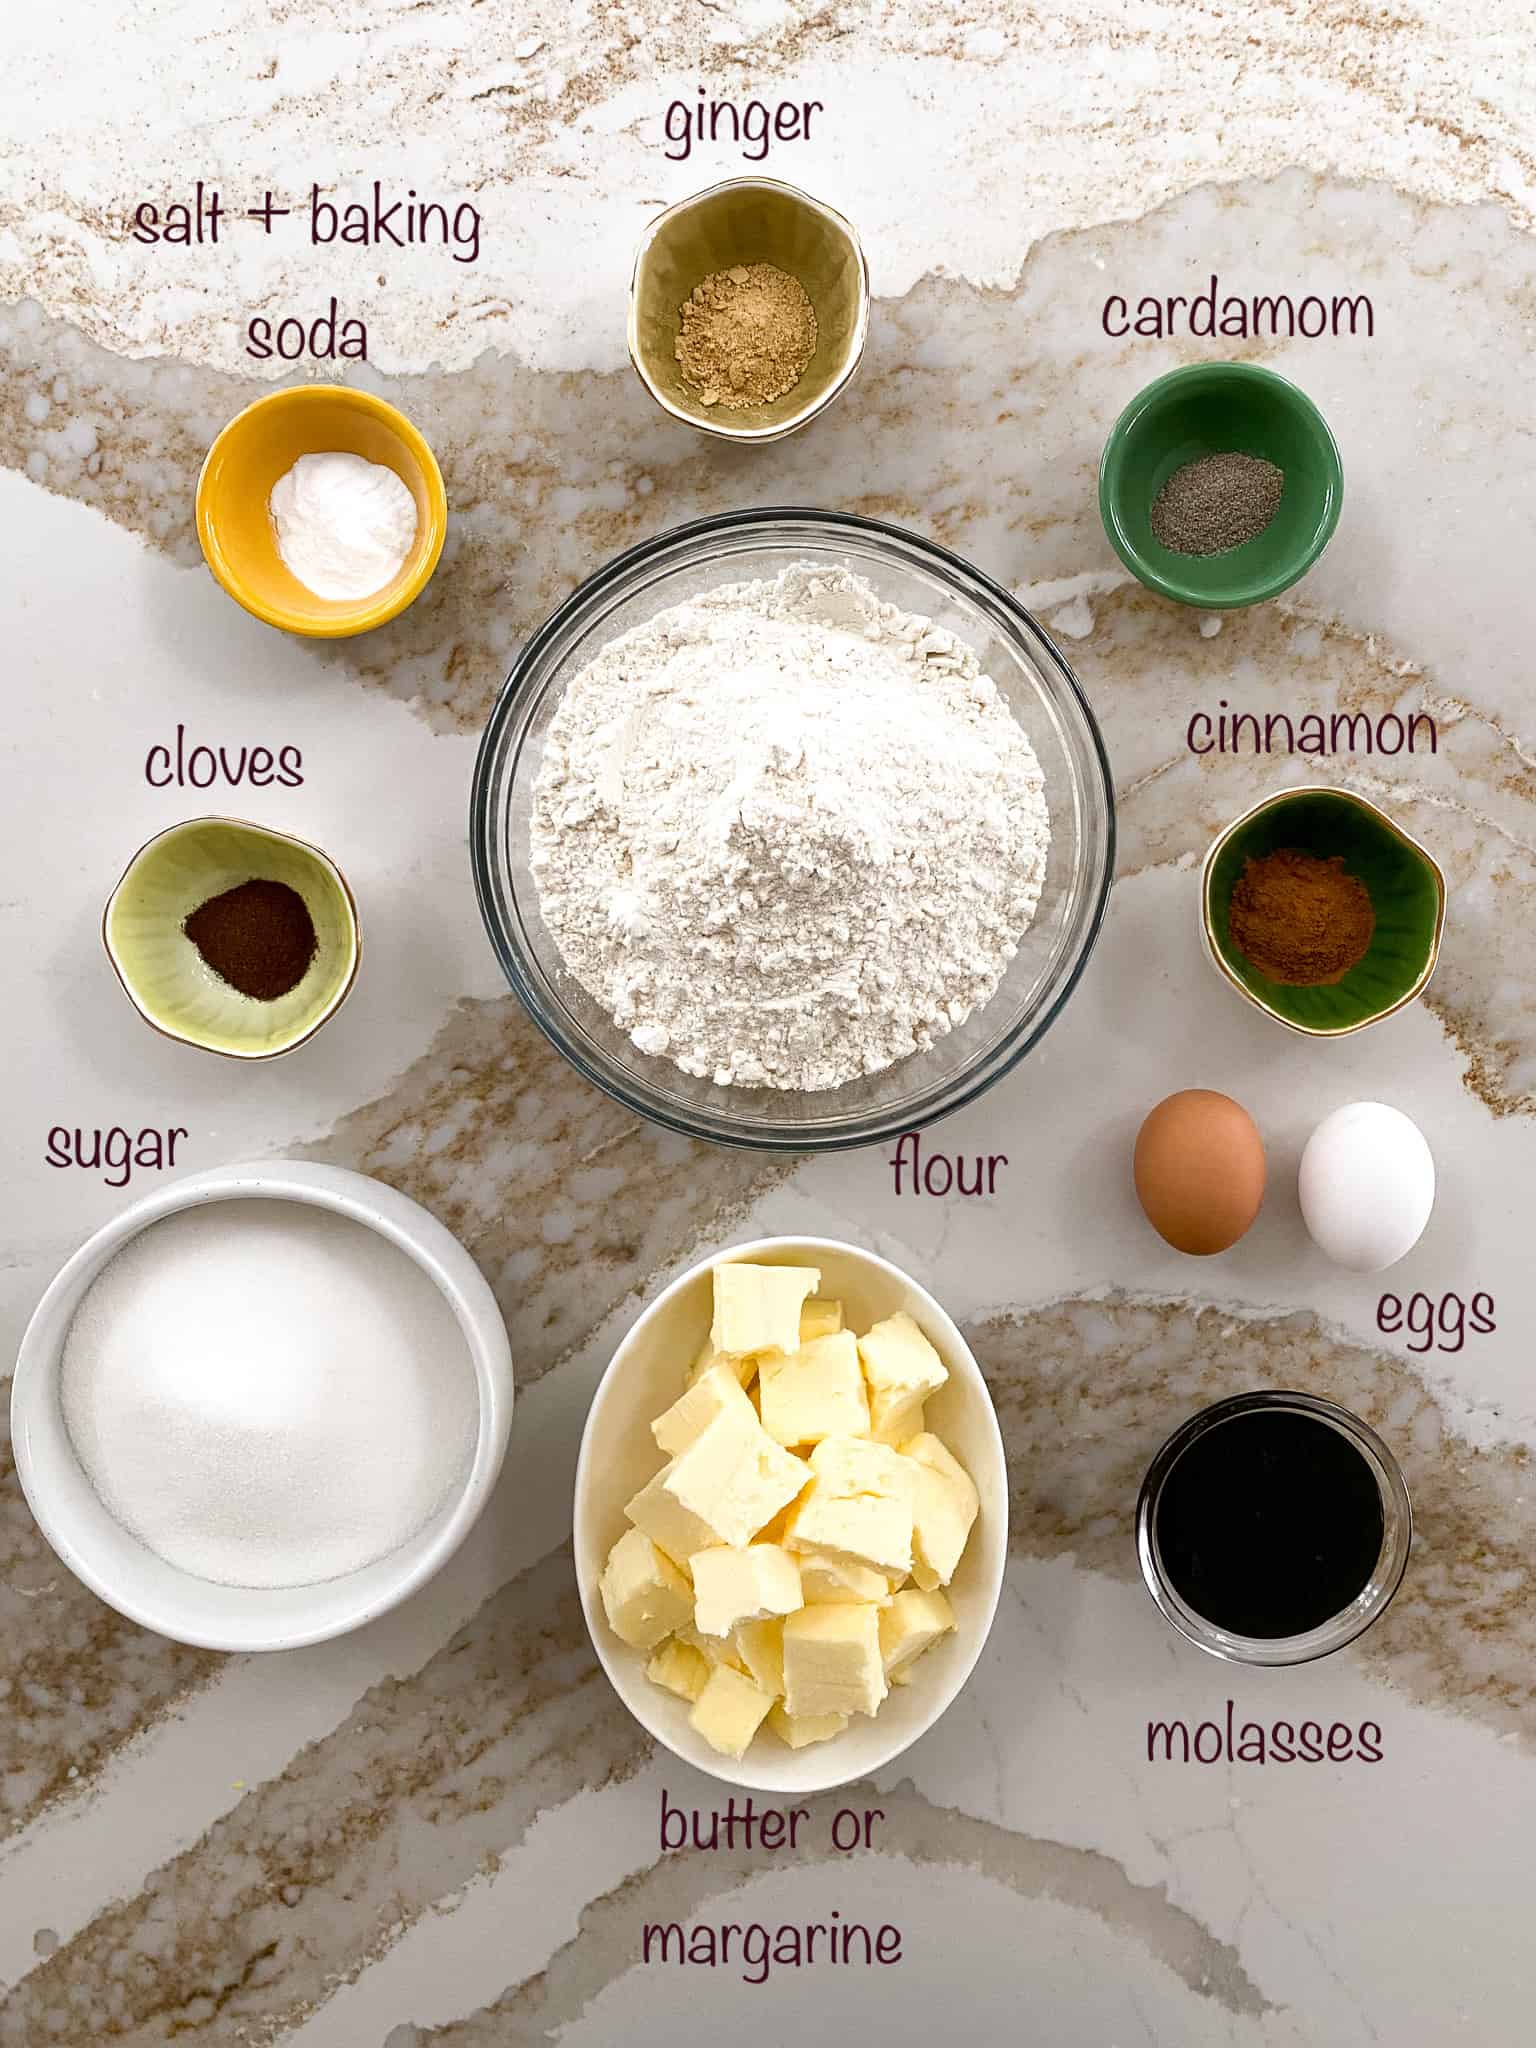 Key ingredients overhead view including flour, cloves, cardamom, cinnamon, ginger, baking soda, salt, sugar, butter, molasses.